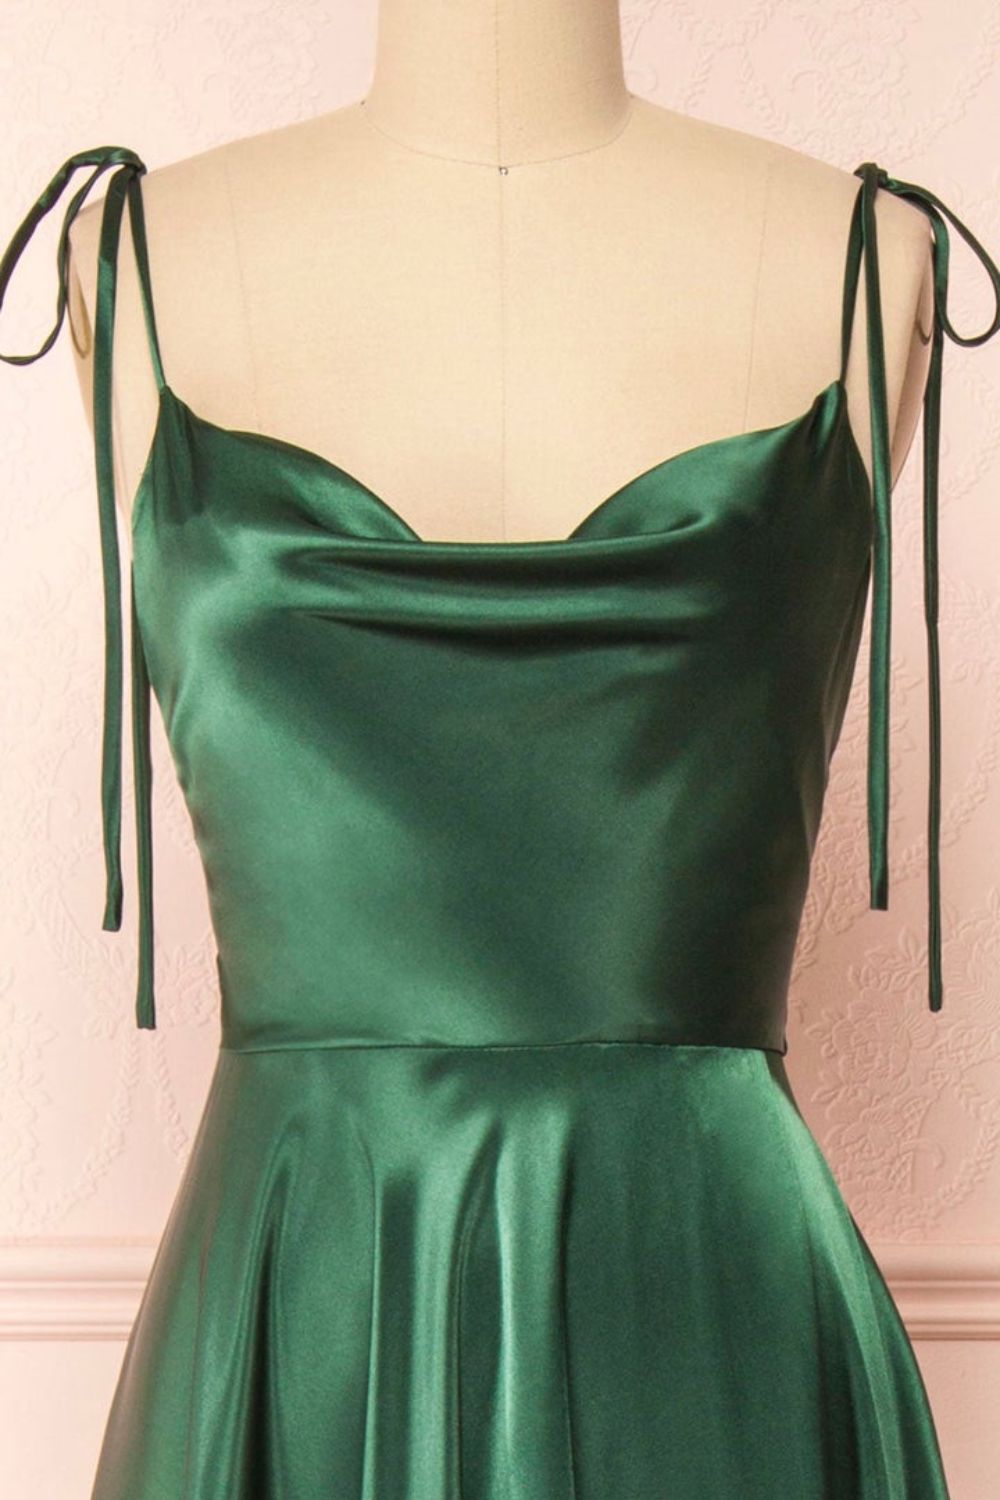 dressimeSexy Satin Spaghetti Straps Sleeveless Split Front Prom Dress 